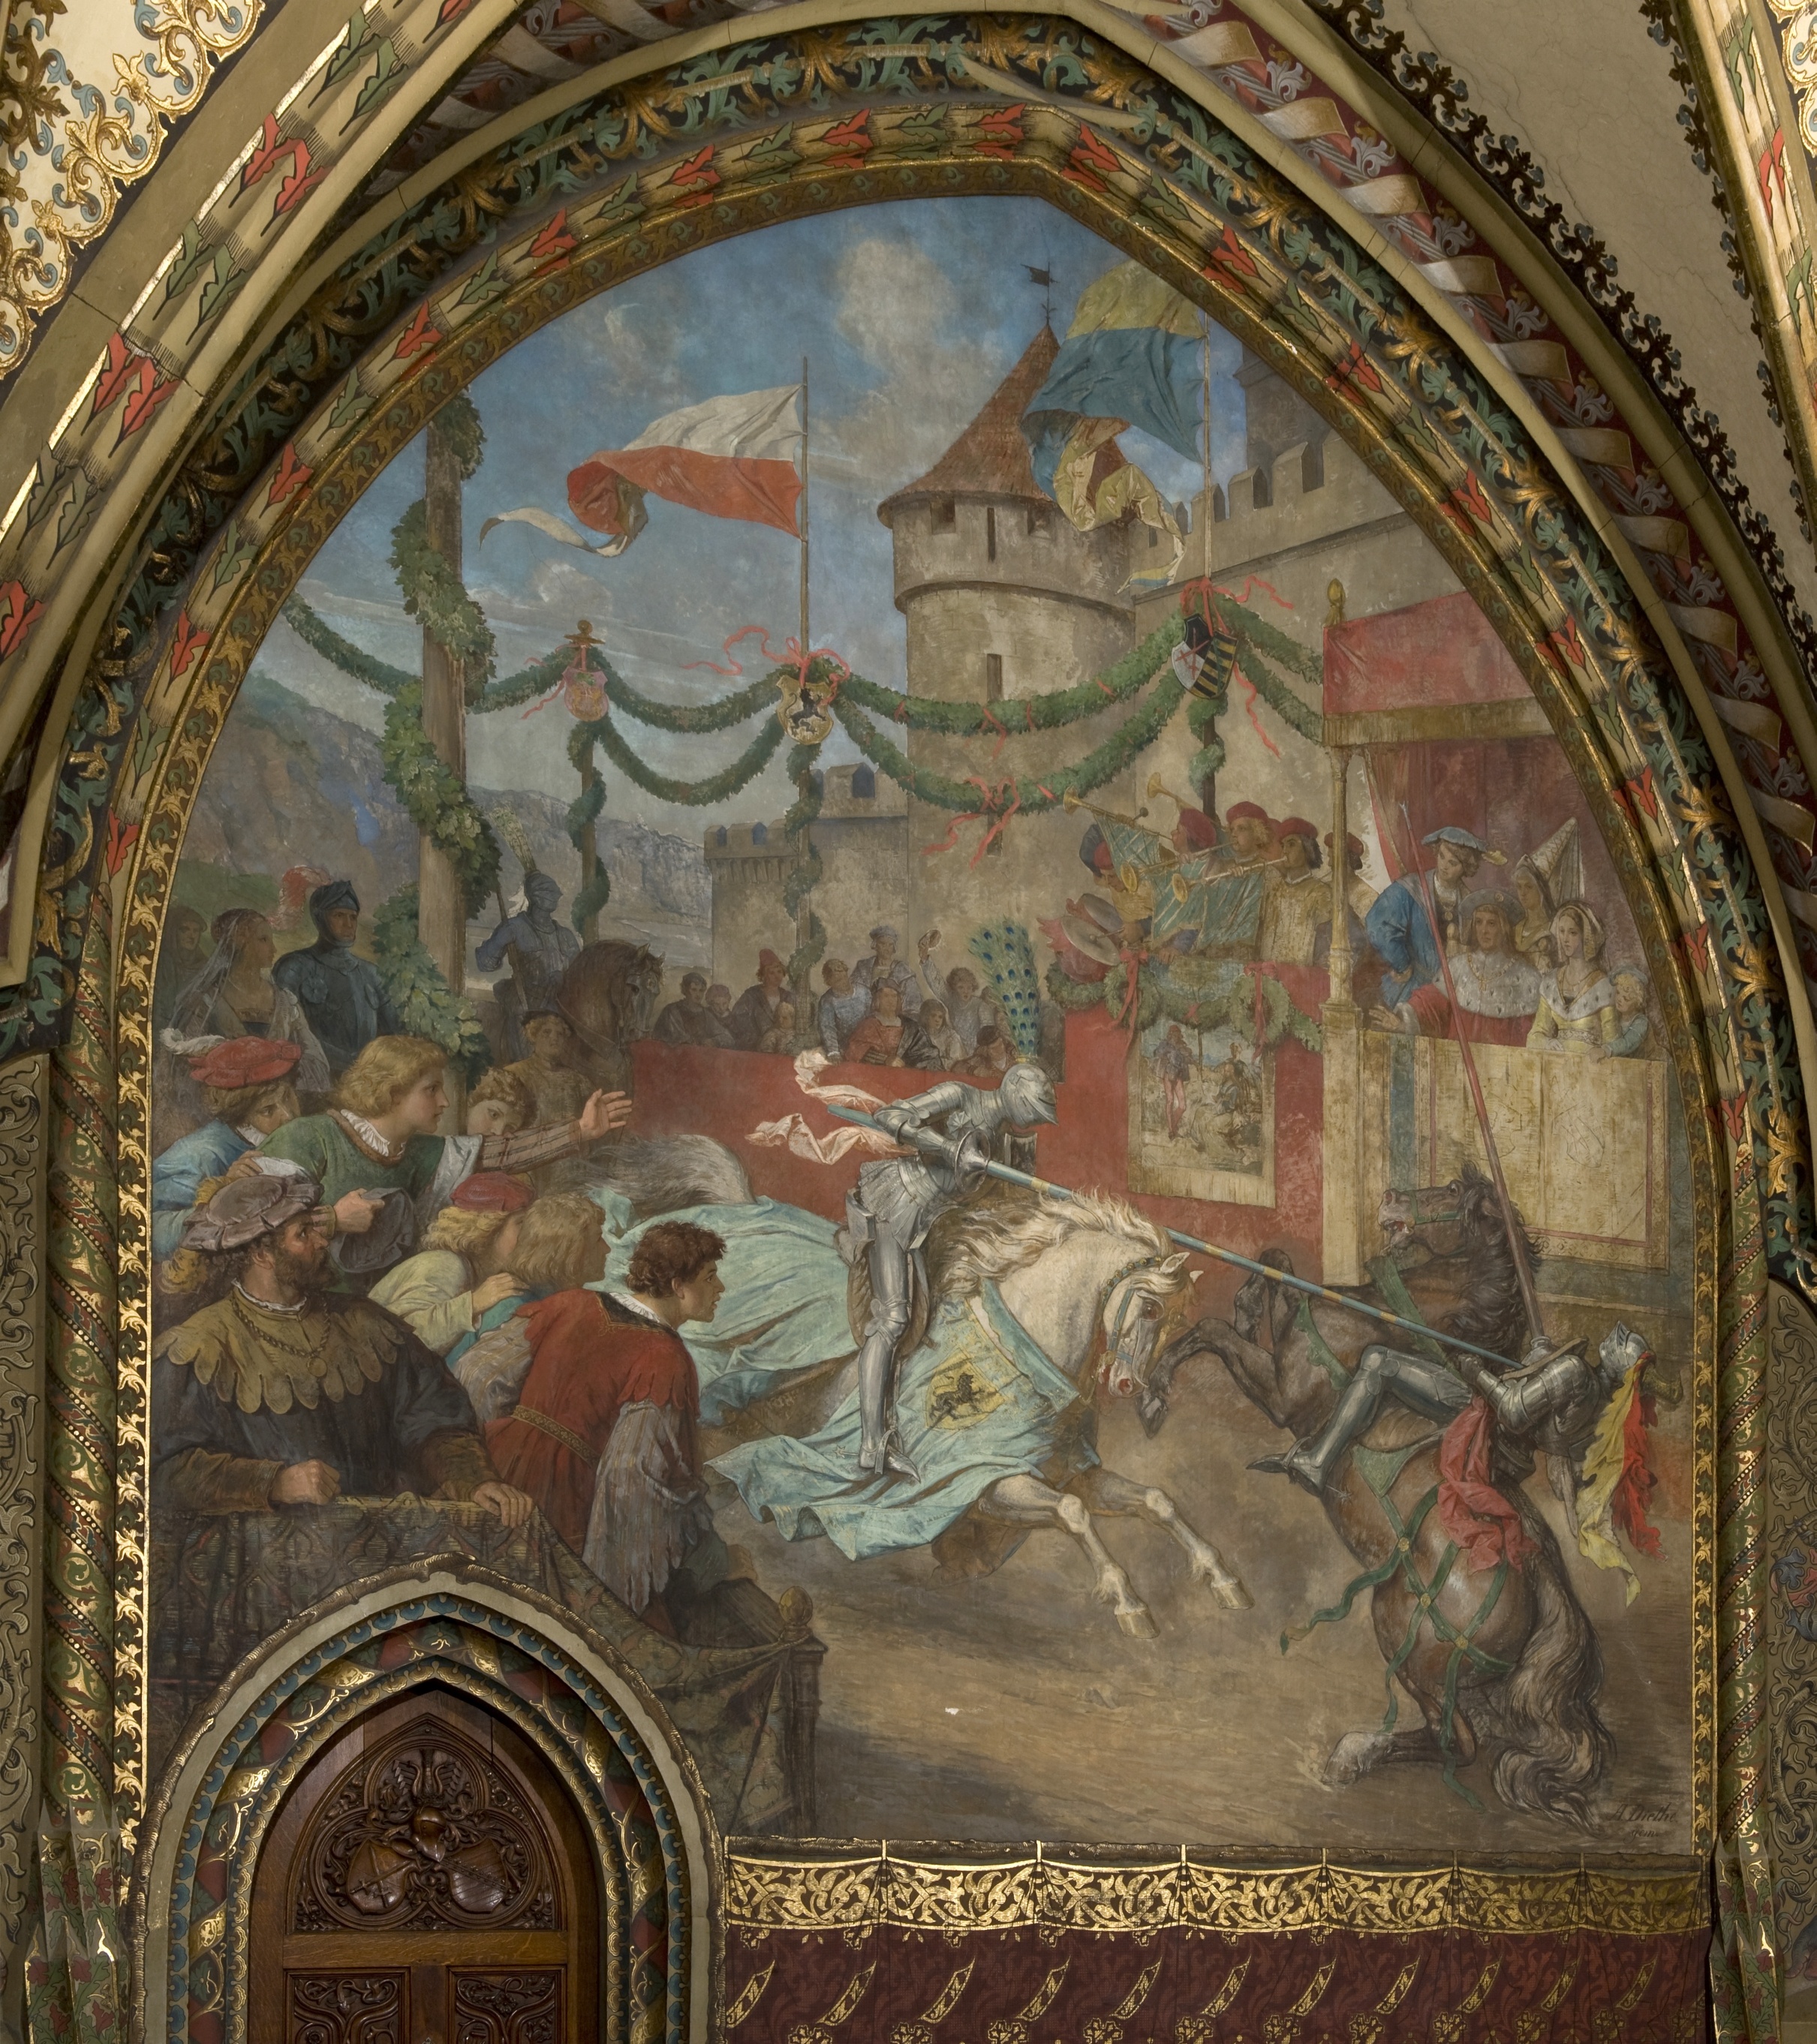 Wandbild:
"Erster Turnierkampf Albrechts in Pirna, 1459" (SBG gGmbH CC BY-NC-SA)